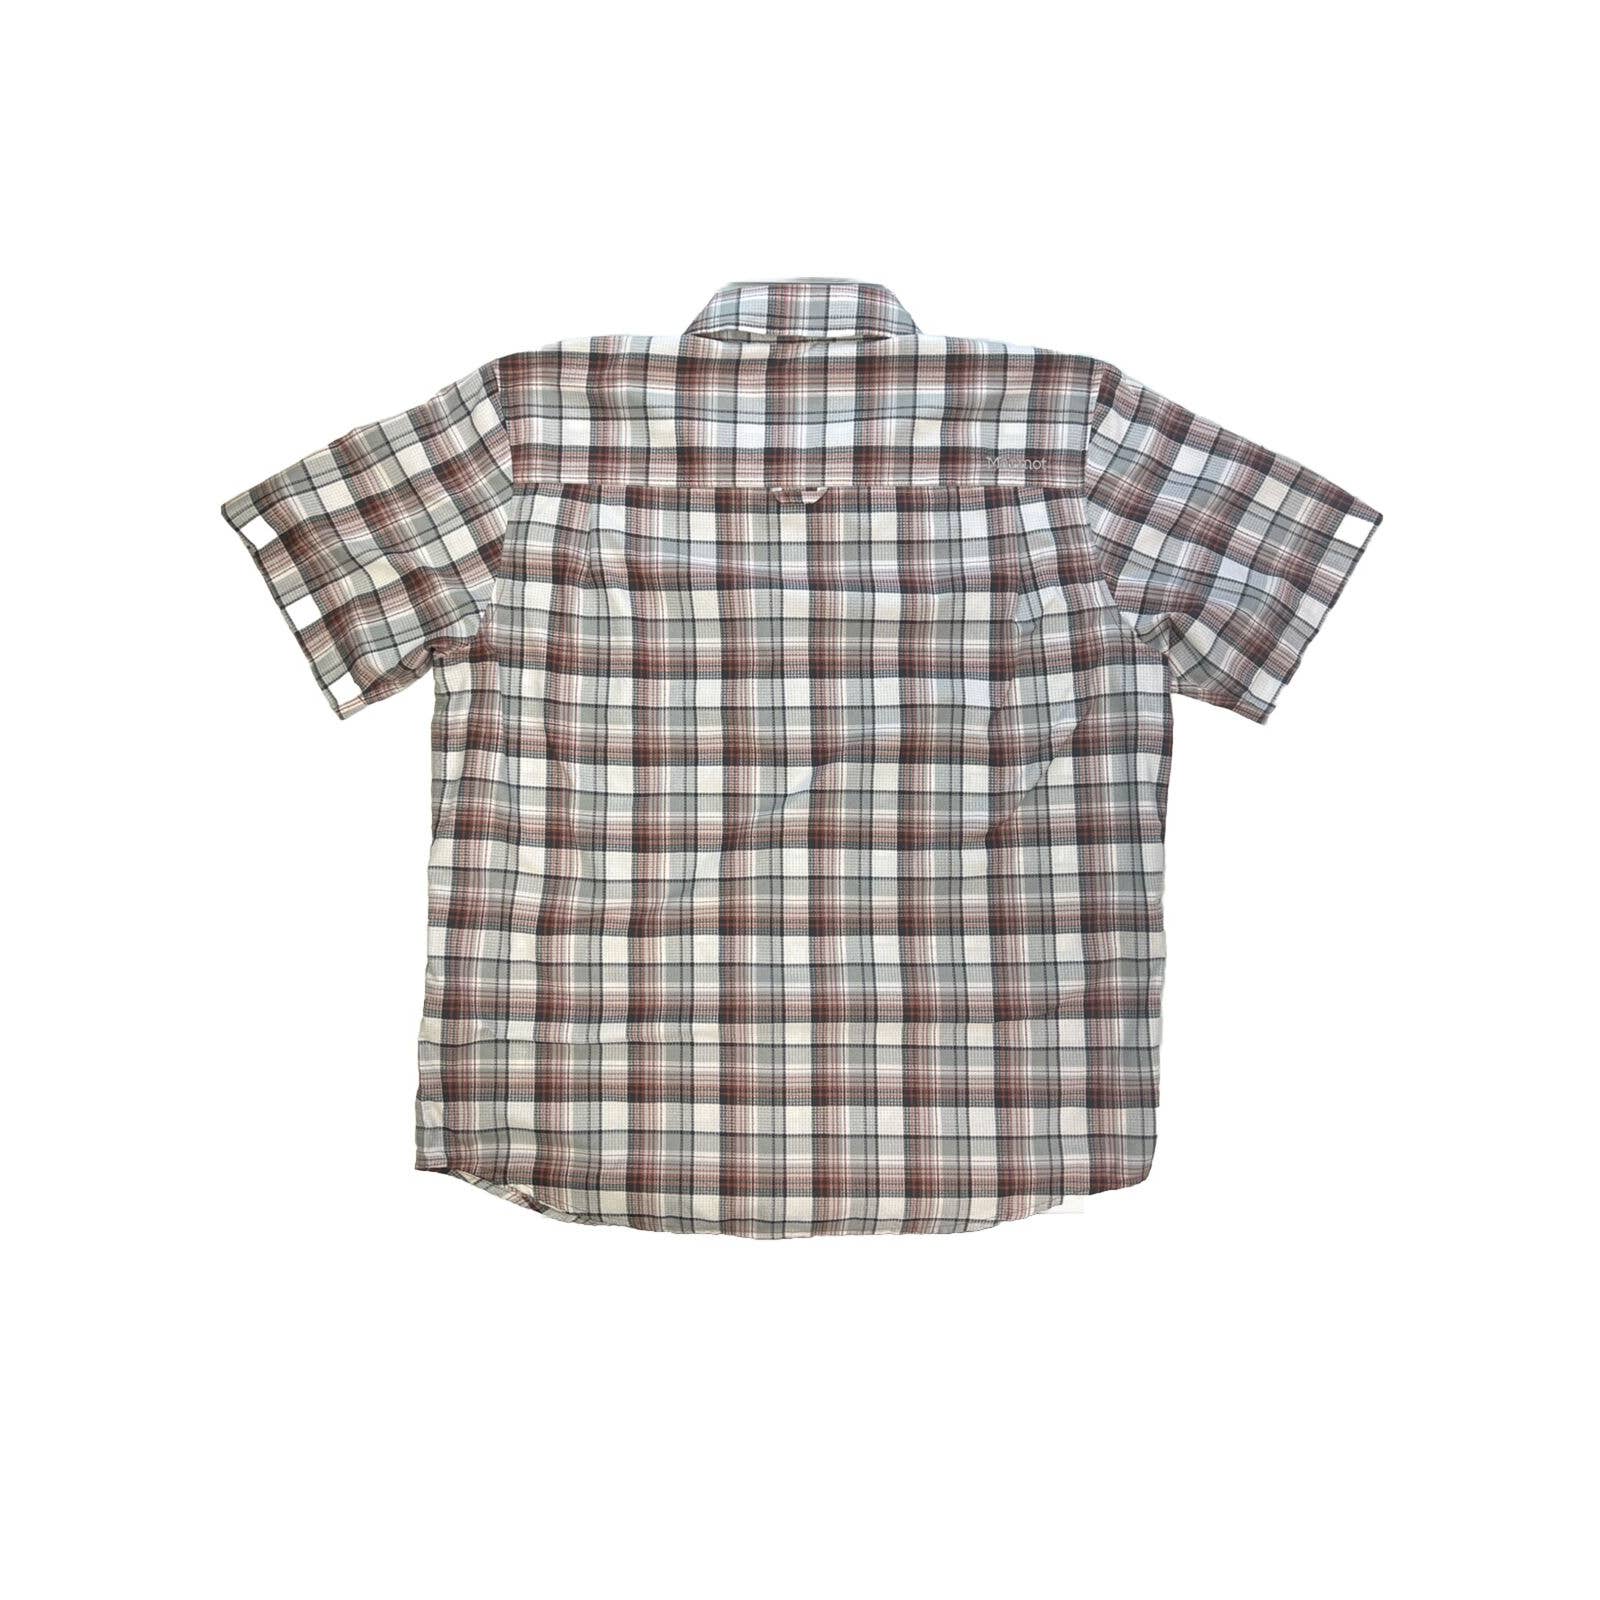 Marmot Syrocco Shirt Men’s Xl Short Sleeve Button Up Plaid Polyester Hiking UPF